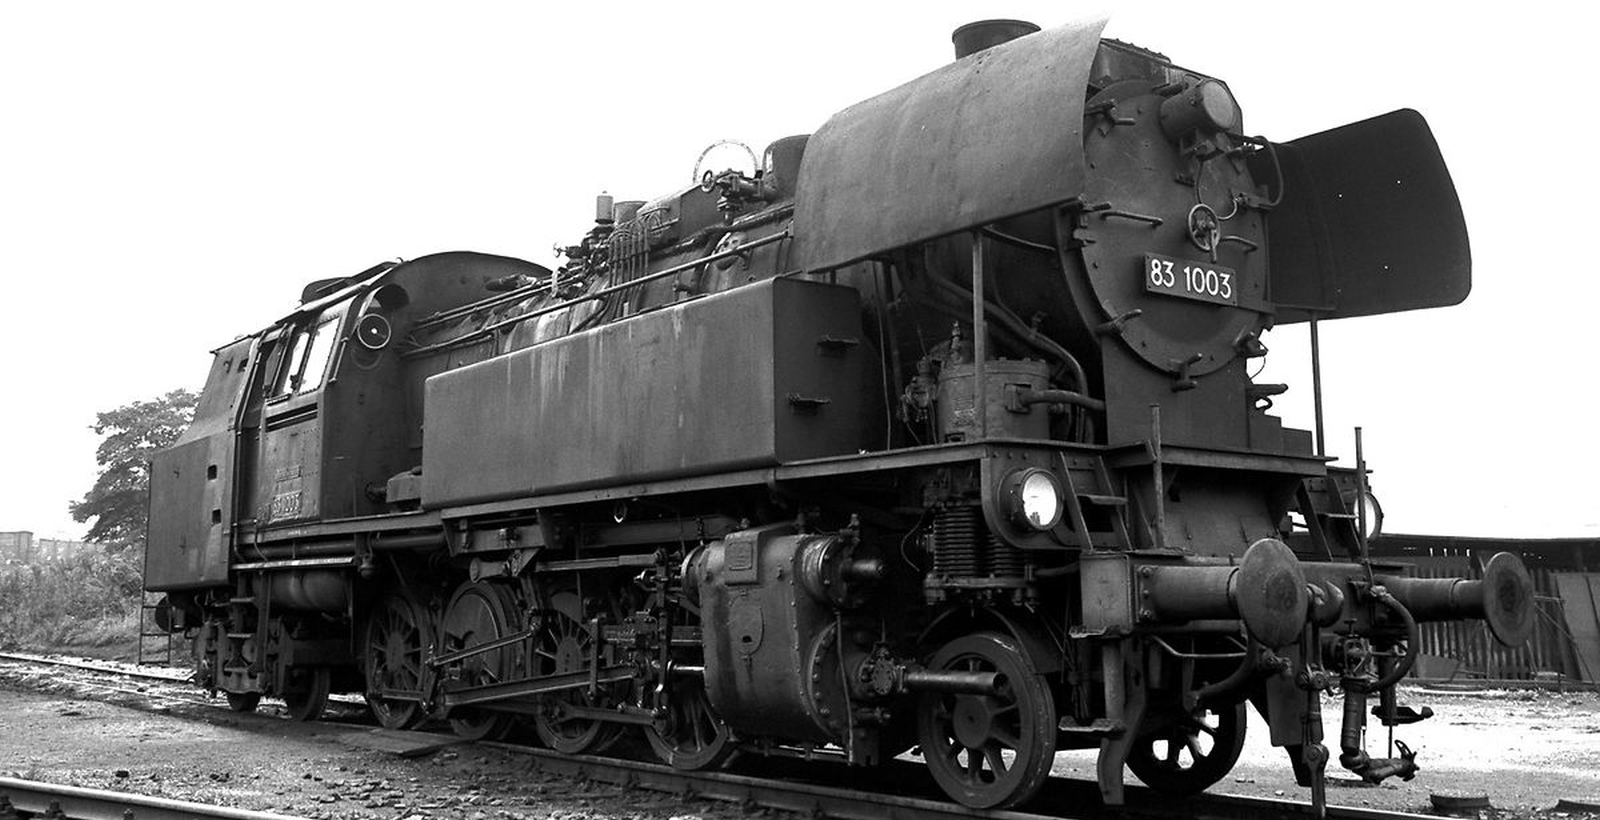 83 1003 in September 1967 in Altenburg depot